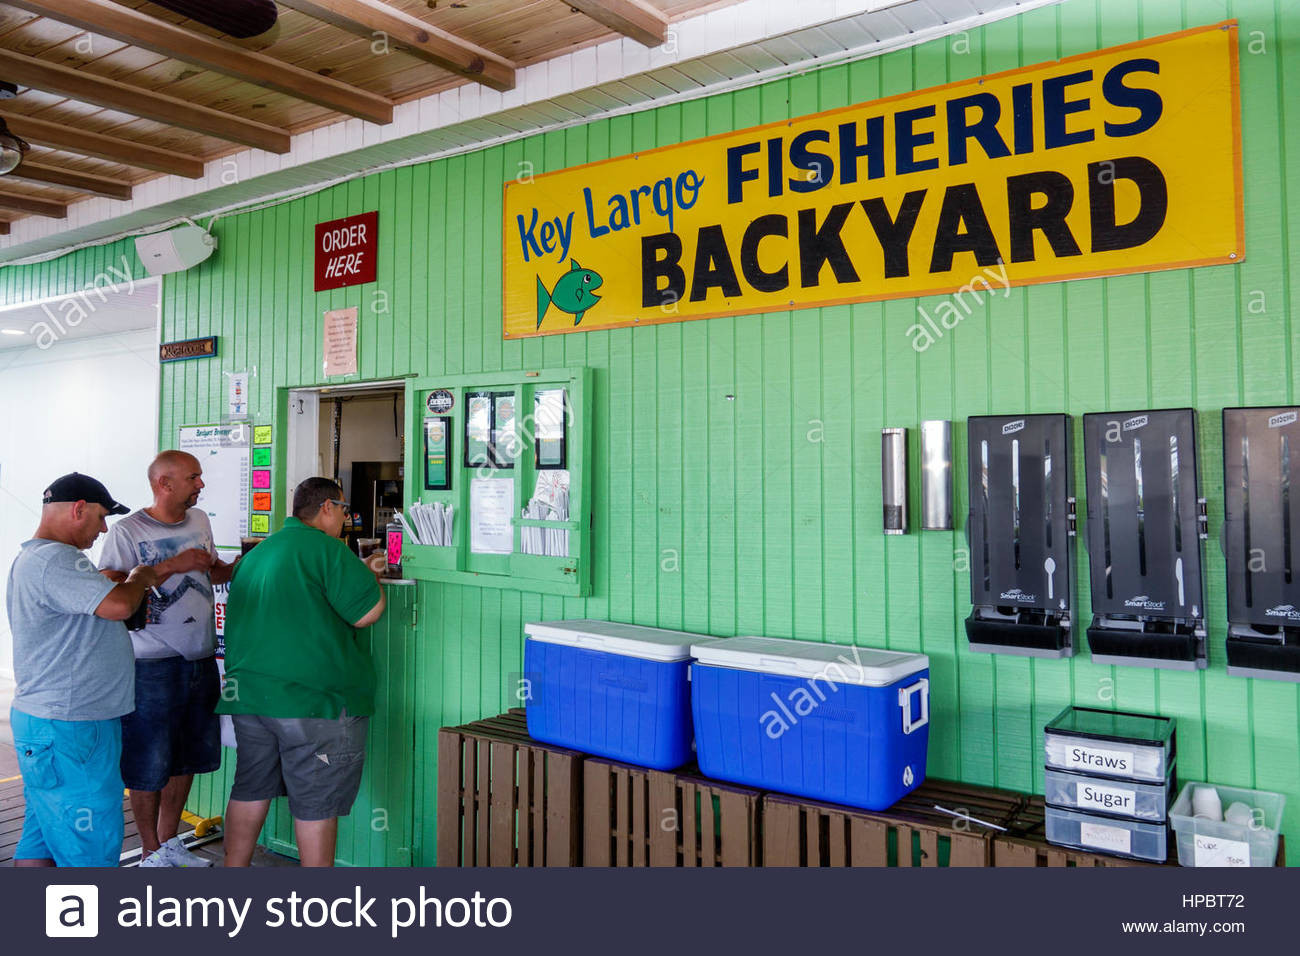 Key Largo Fisheries Backyard
 Key Largo Florida Upper Florida Keys Key Largo Fisheries